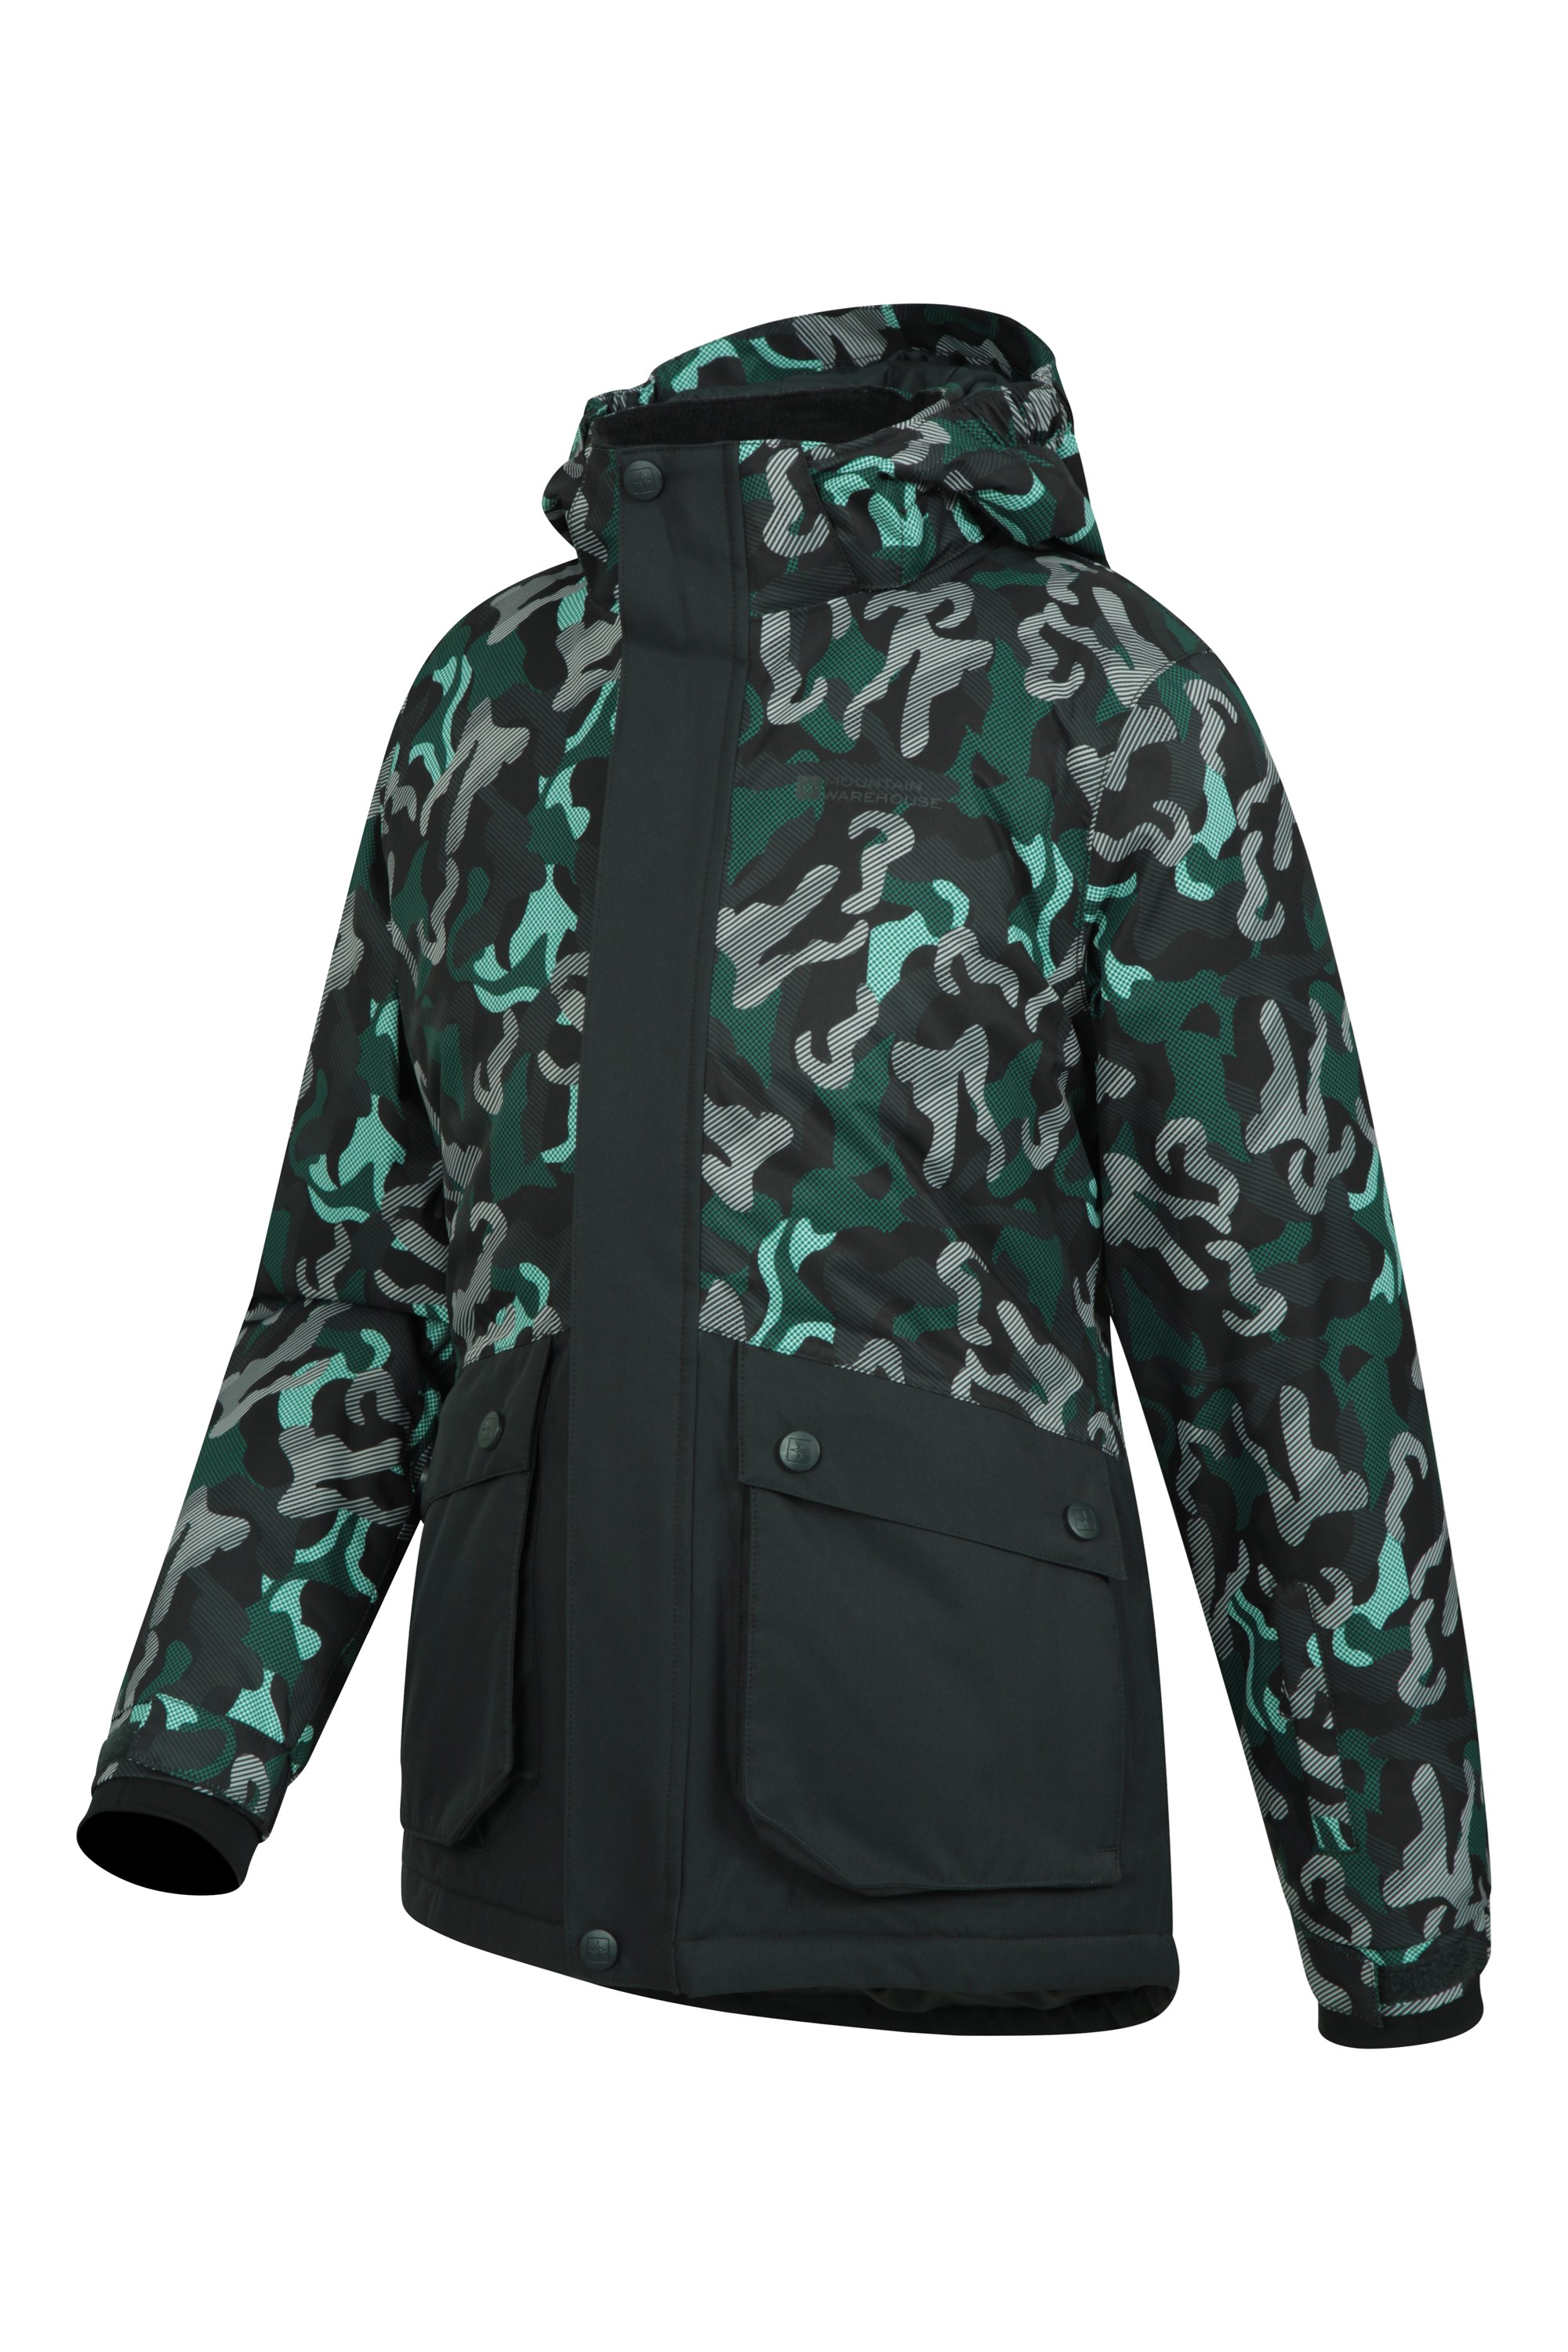 Waterproof Winter Coat Mountain Warehouse Vail Kids Ski Jacket